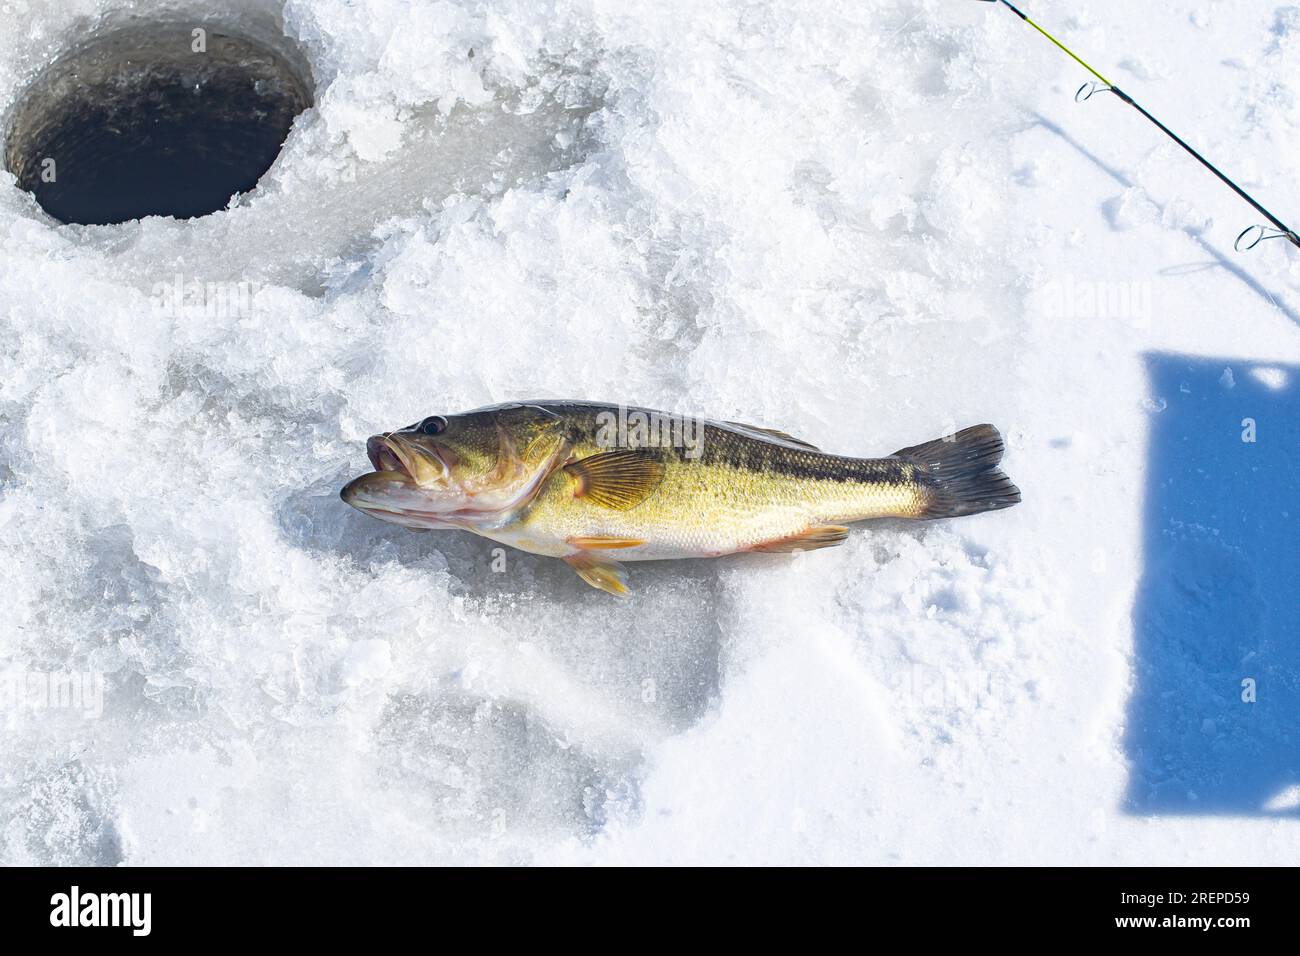 Ice fishing catching fish on ice water activity, hobby leisure Stock Photo